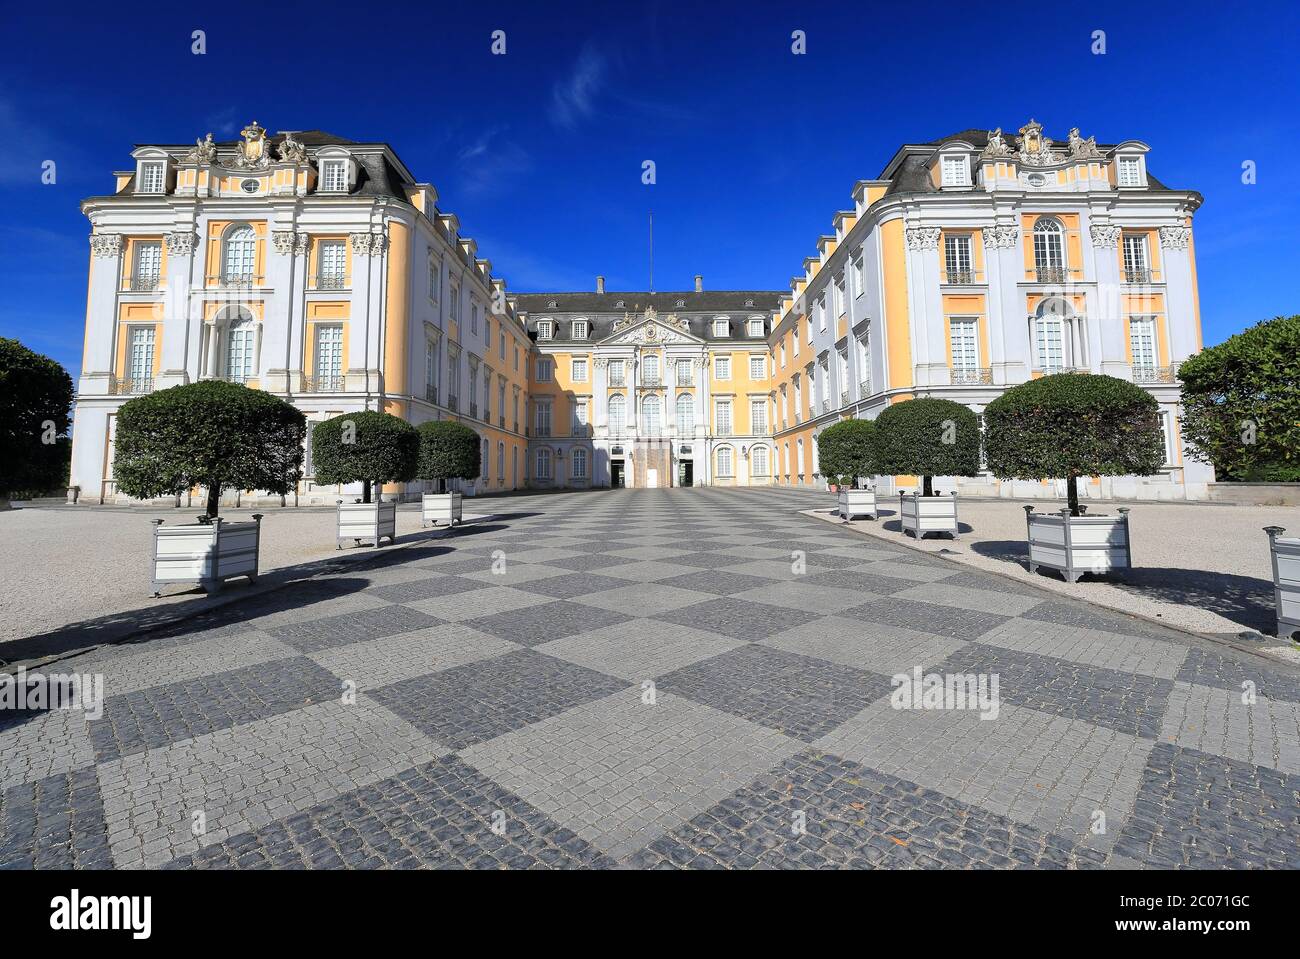 The Baroque Augustusburg Palace. Brühl, Germany, Europe. Stock Photo